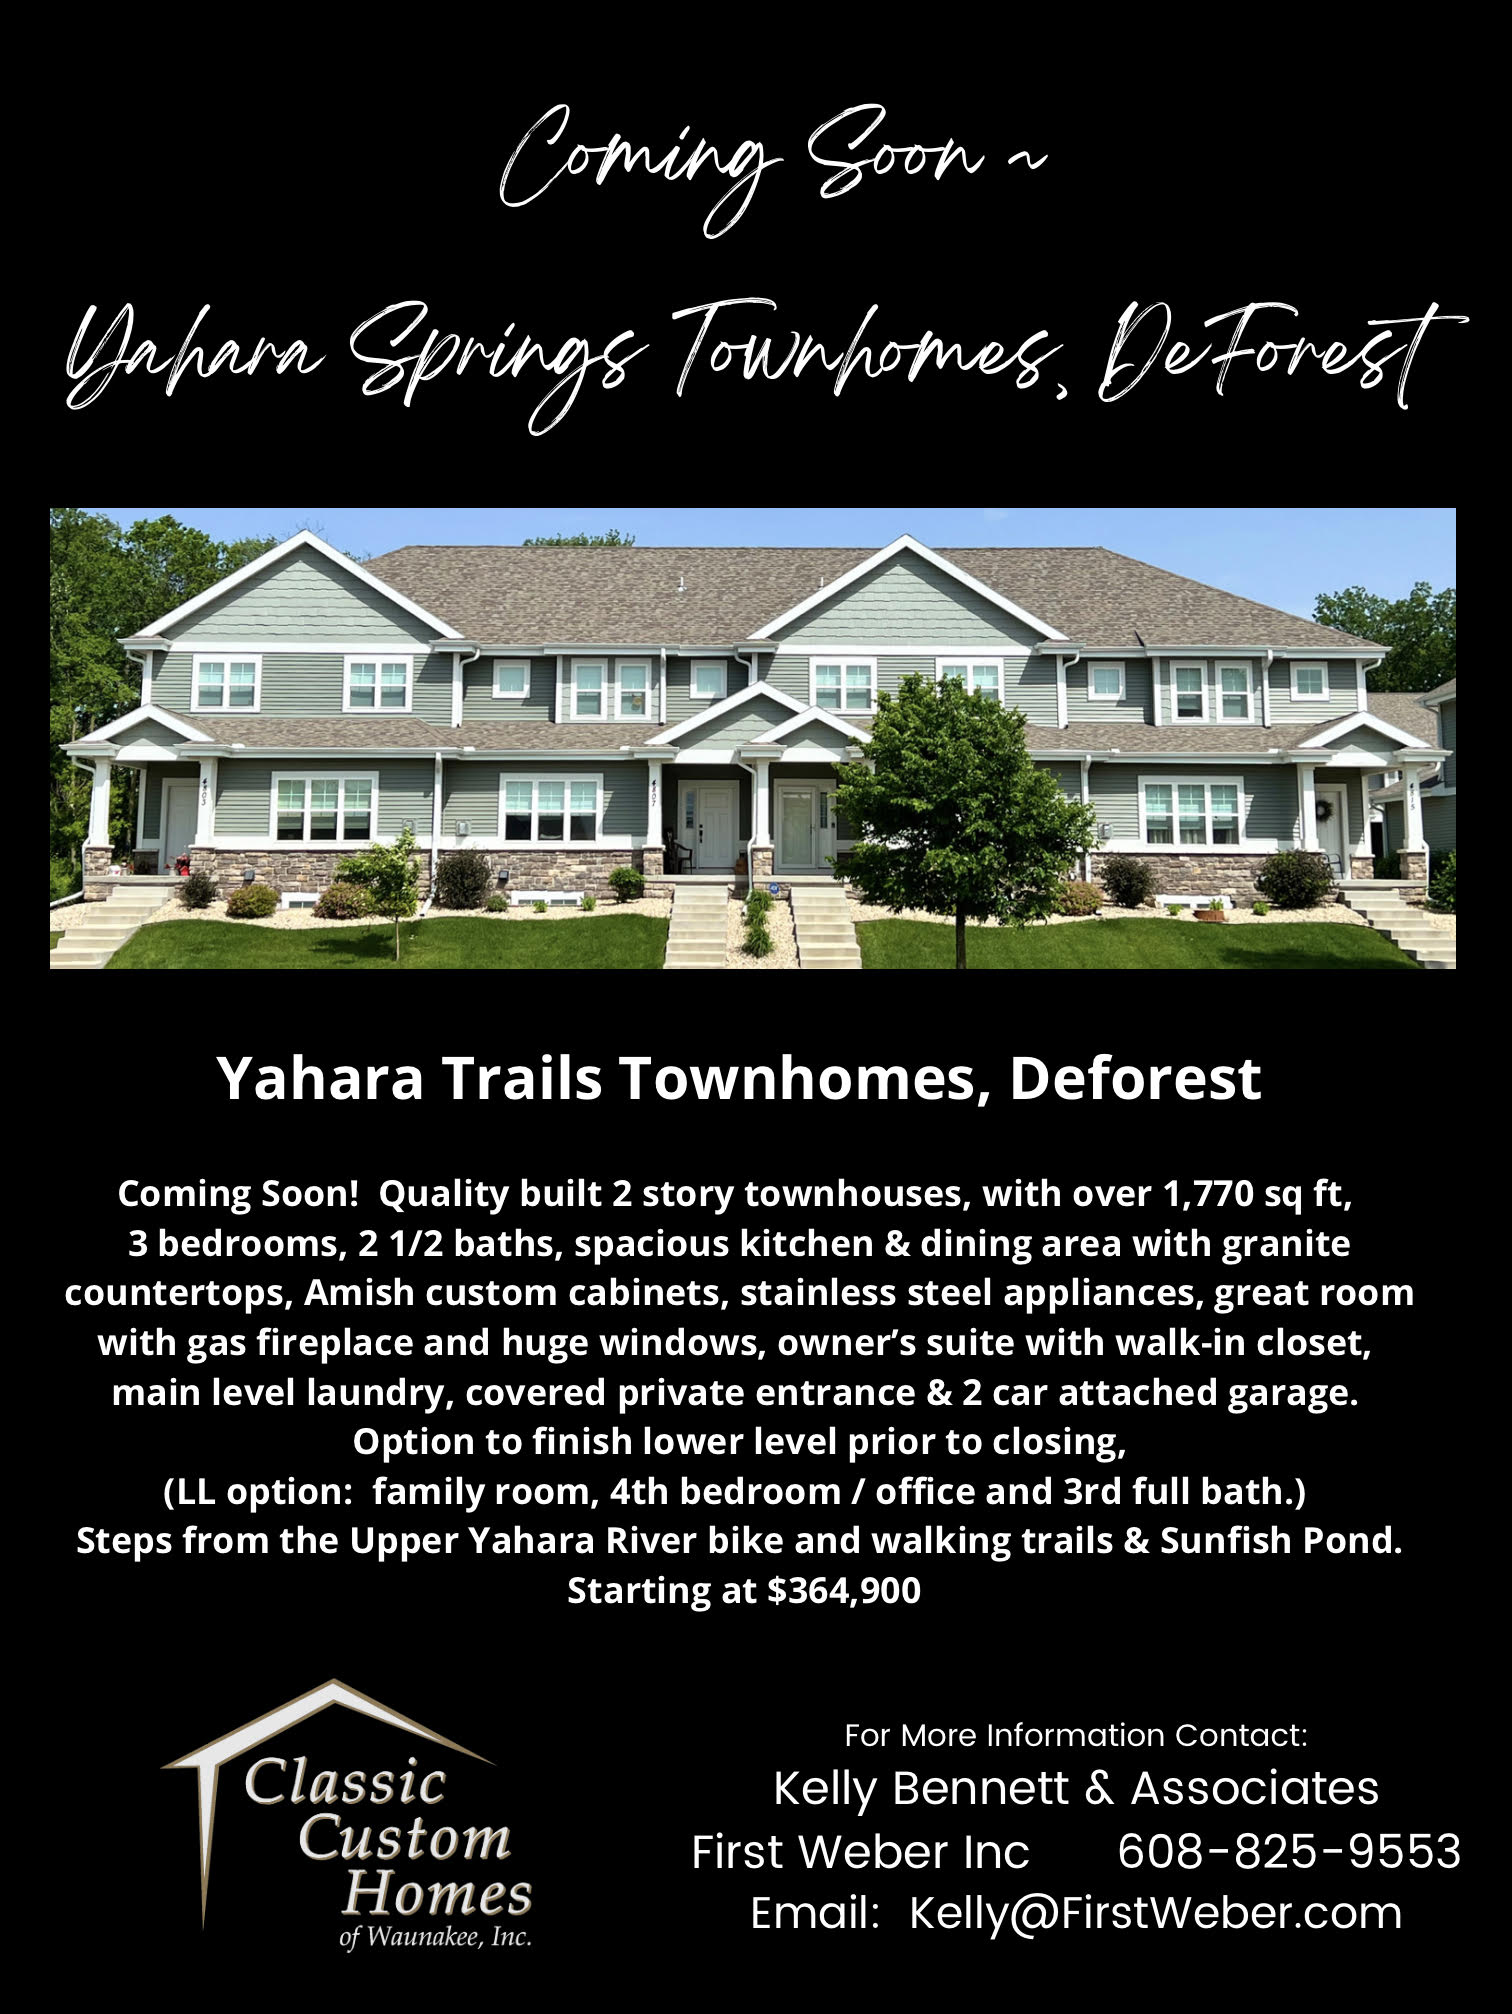 Coming soon: Yahara Springs Townhomes, DeForest